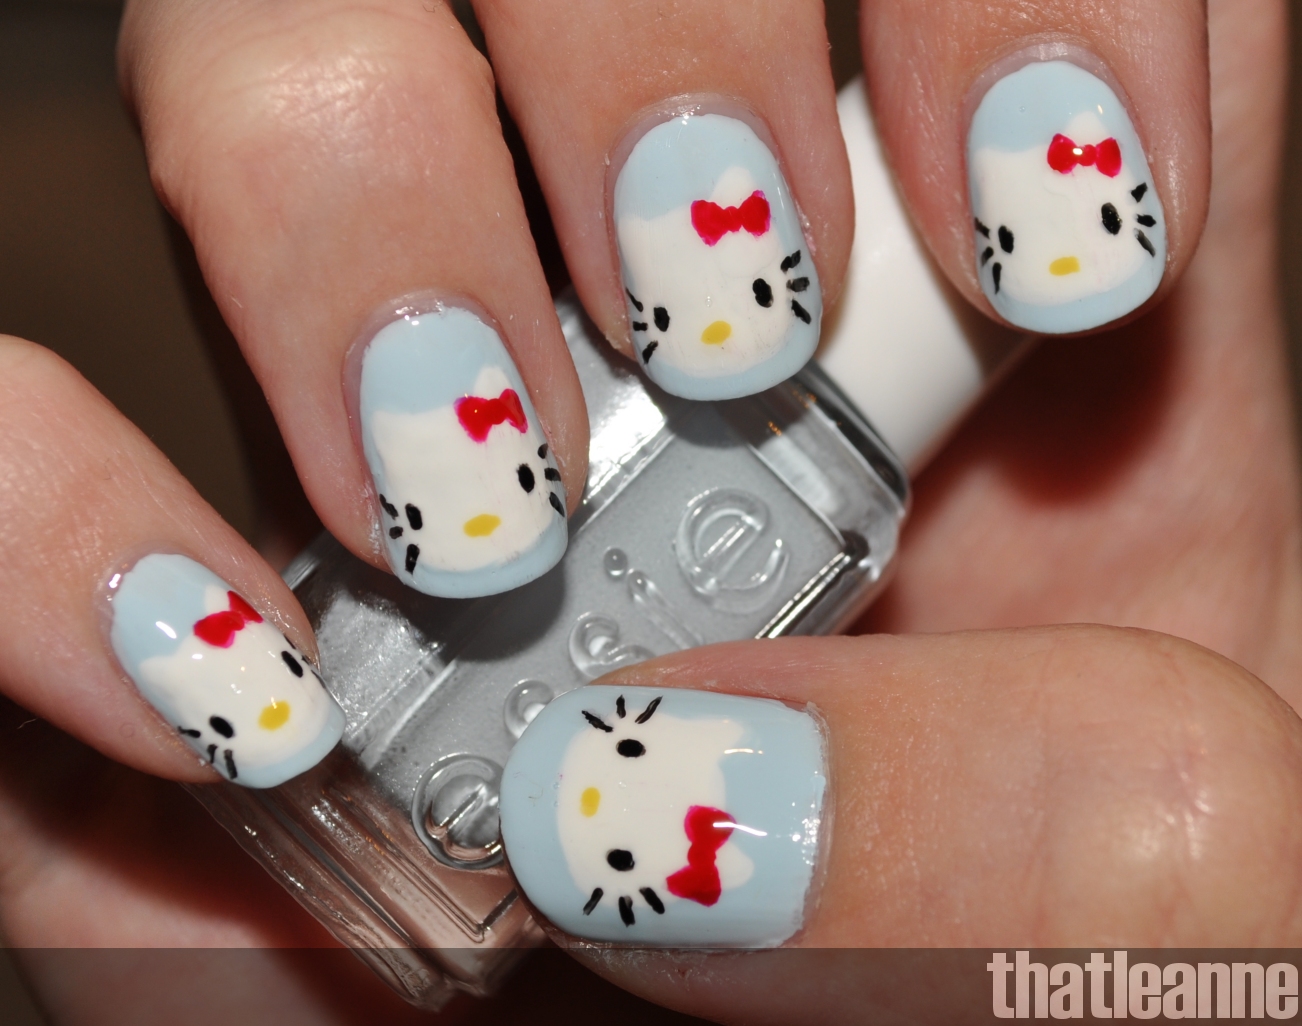 3. Hello Kitty Nail Art - wide 2